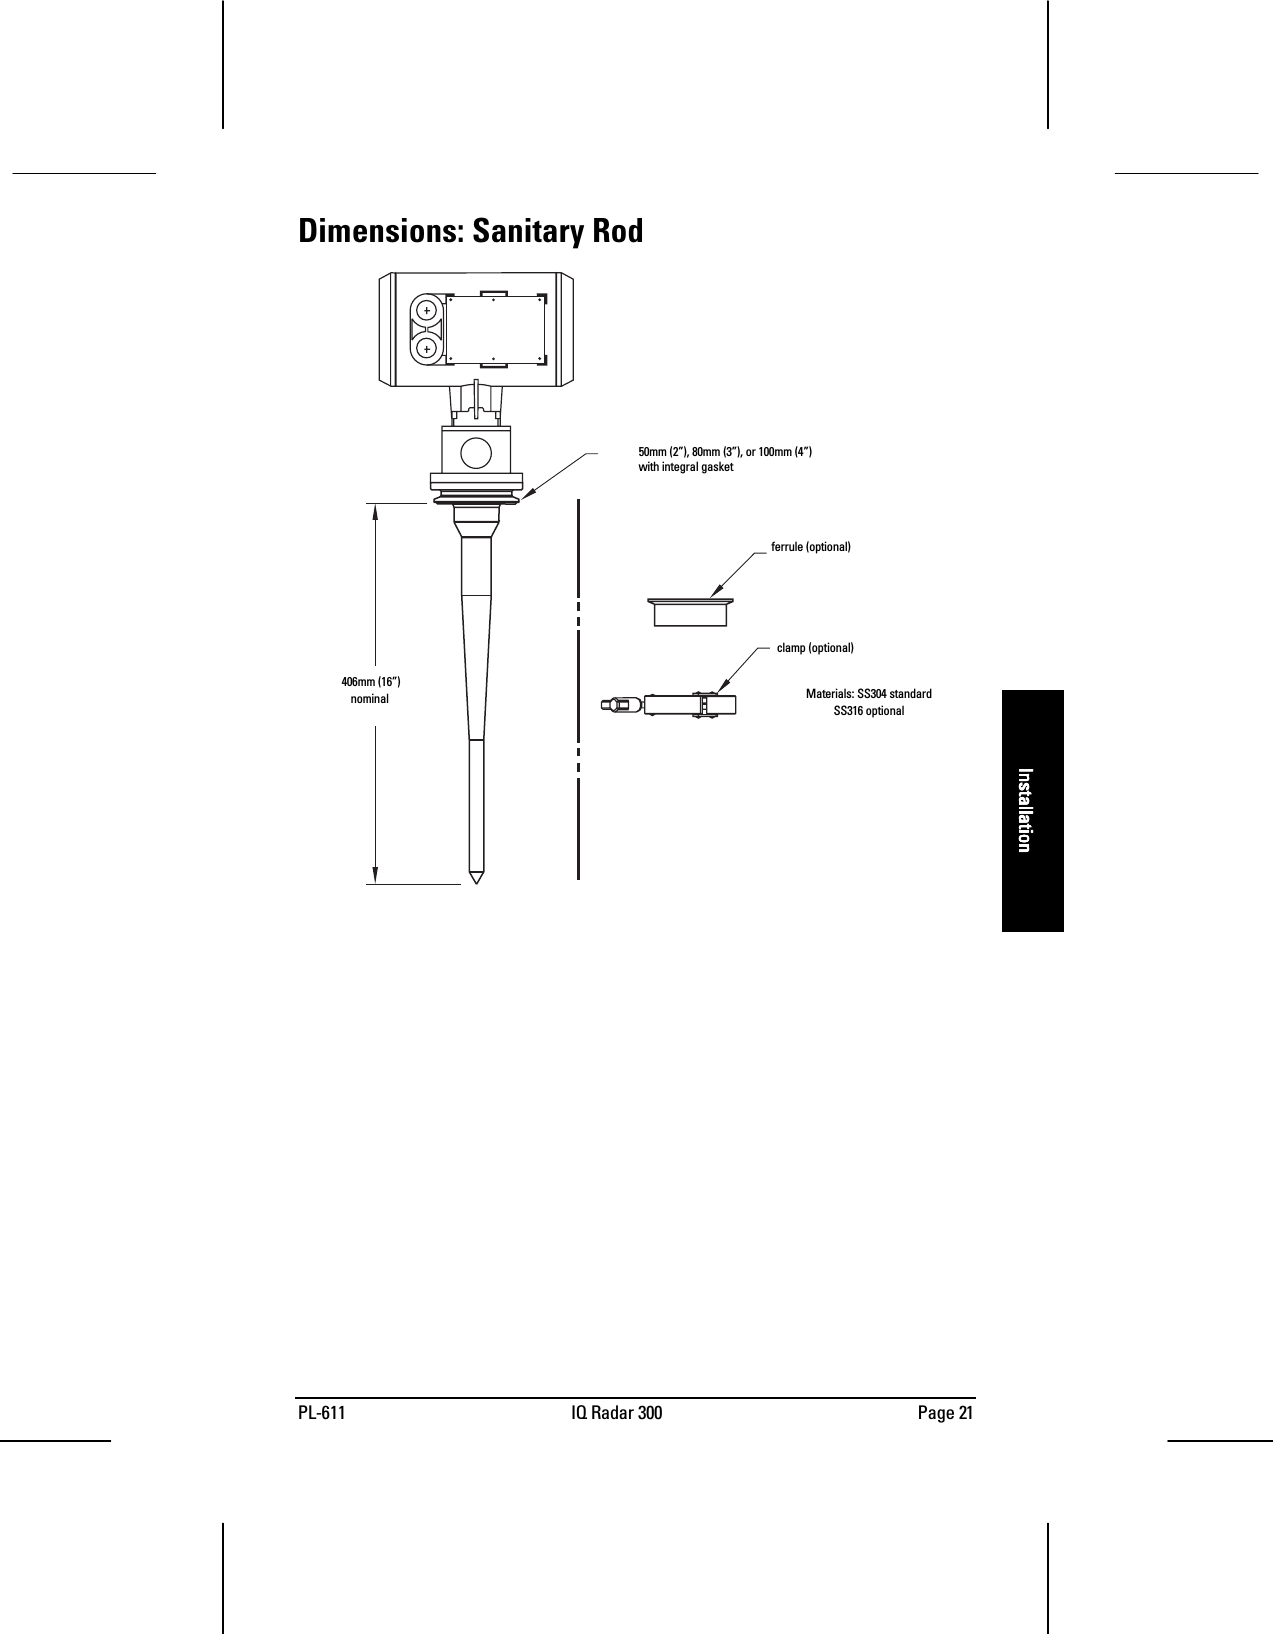 PL-611 IQ Radar 300 Page 21InstallationInstallationInstallationInstallationDimensions: Sanitary Rod50mm (2”), 80mm (3”), or 100mm (4”)with integral gasketMaterials: SS304 standardSS316 optional ferrule (optional)clamp (optional)   406mm (16”)  nominal